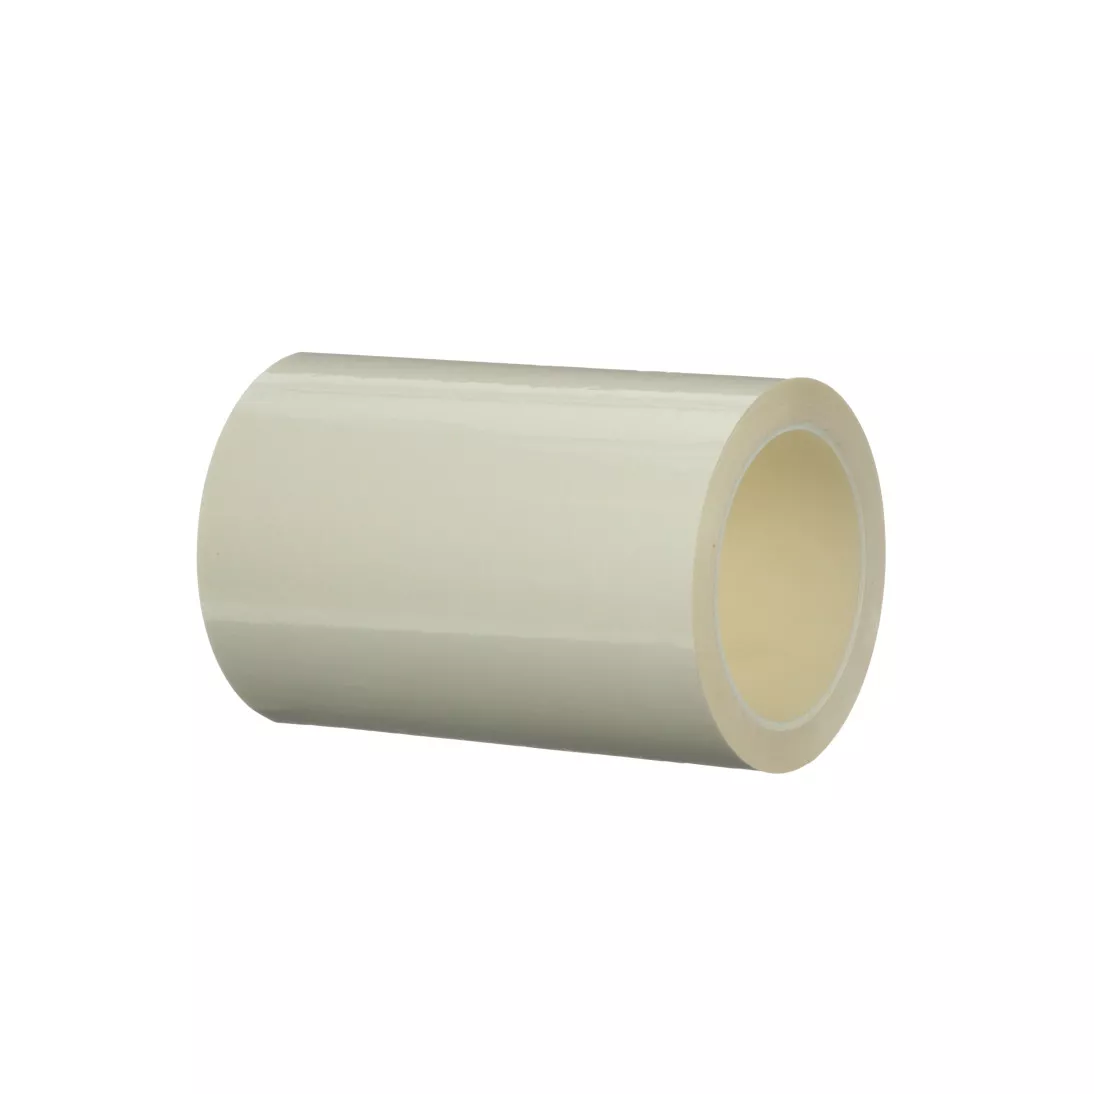 3M™ Polyester Film Tape 850, White, 6 in x 72 yd, 1.9 mil, 8 rolls per case